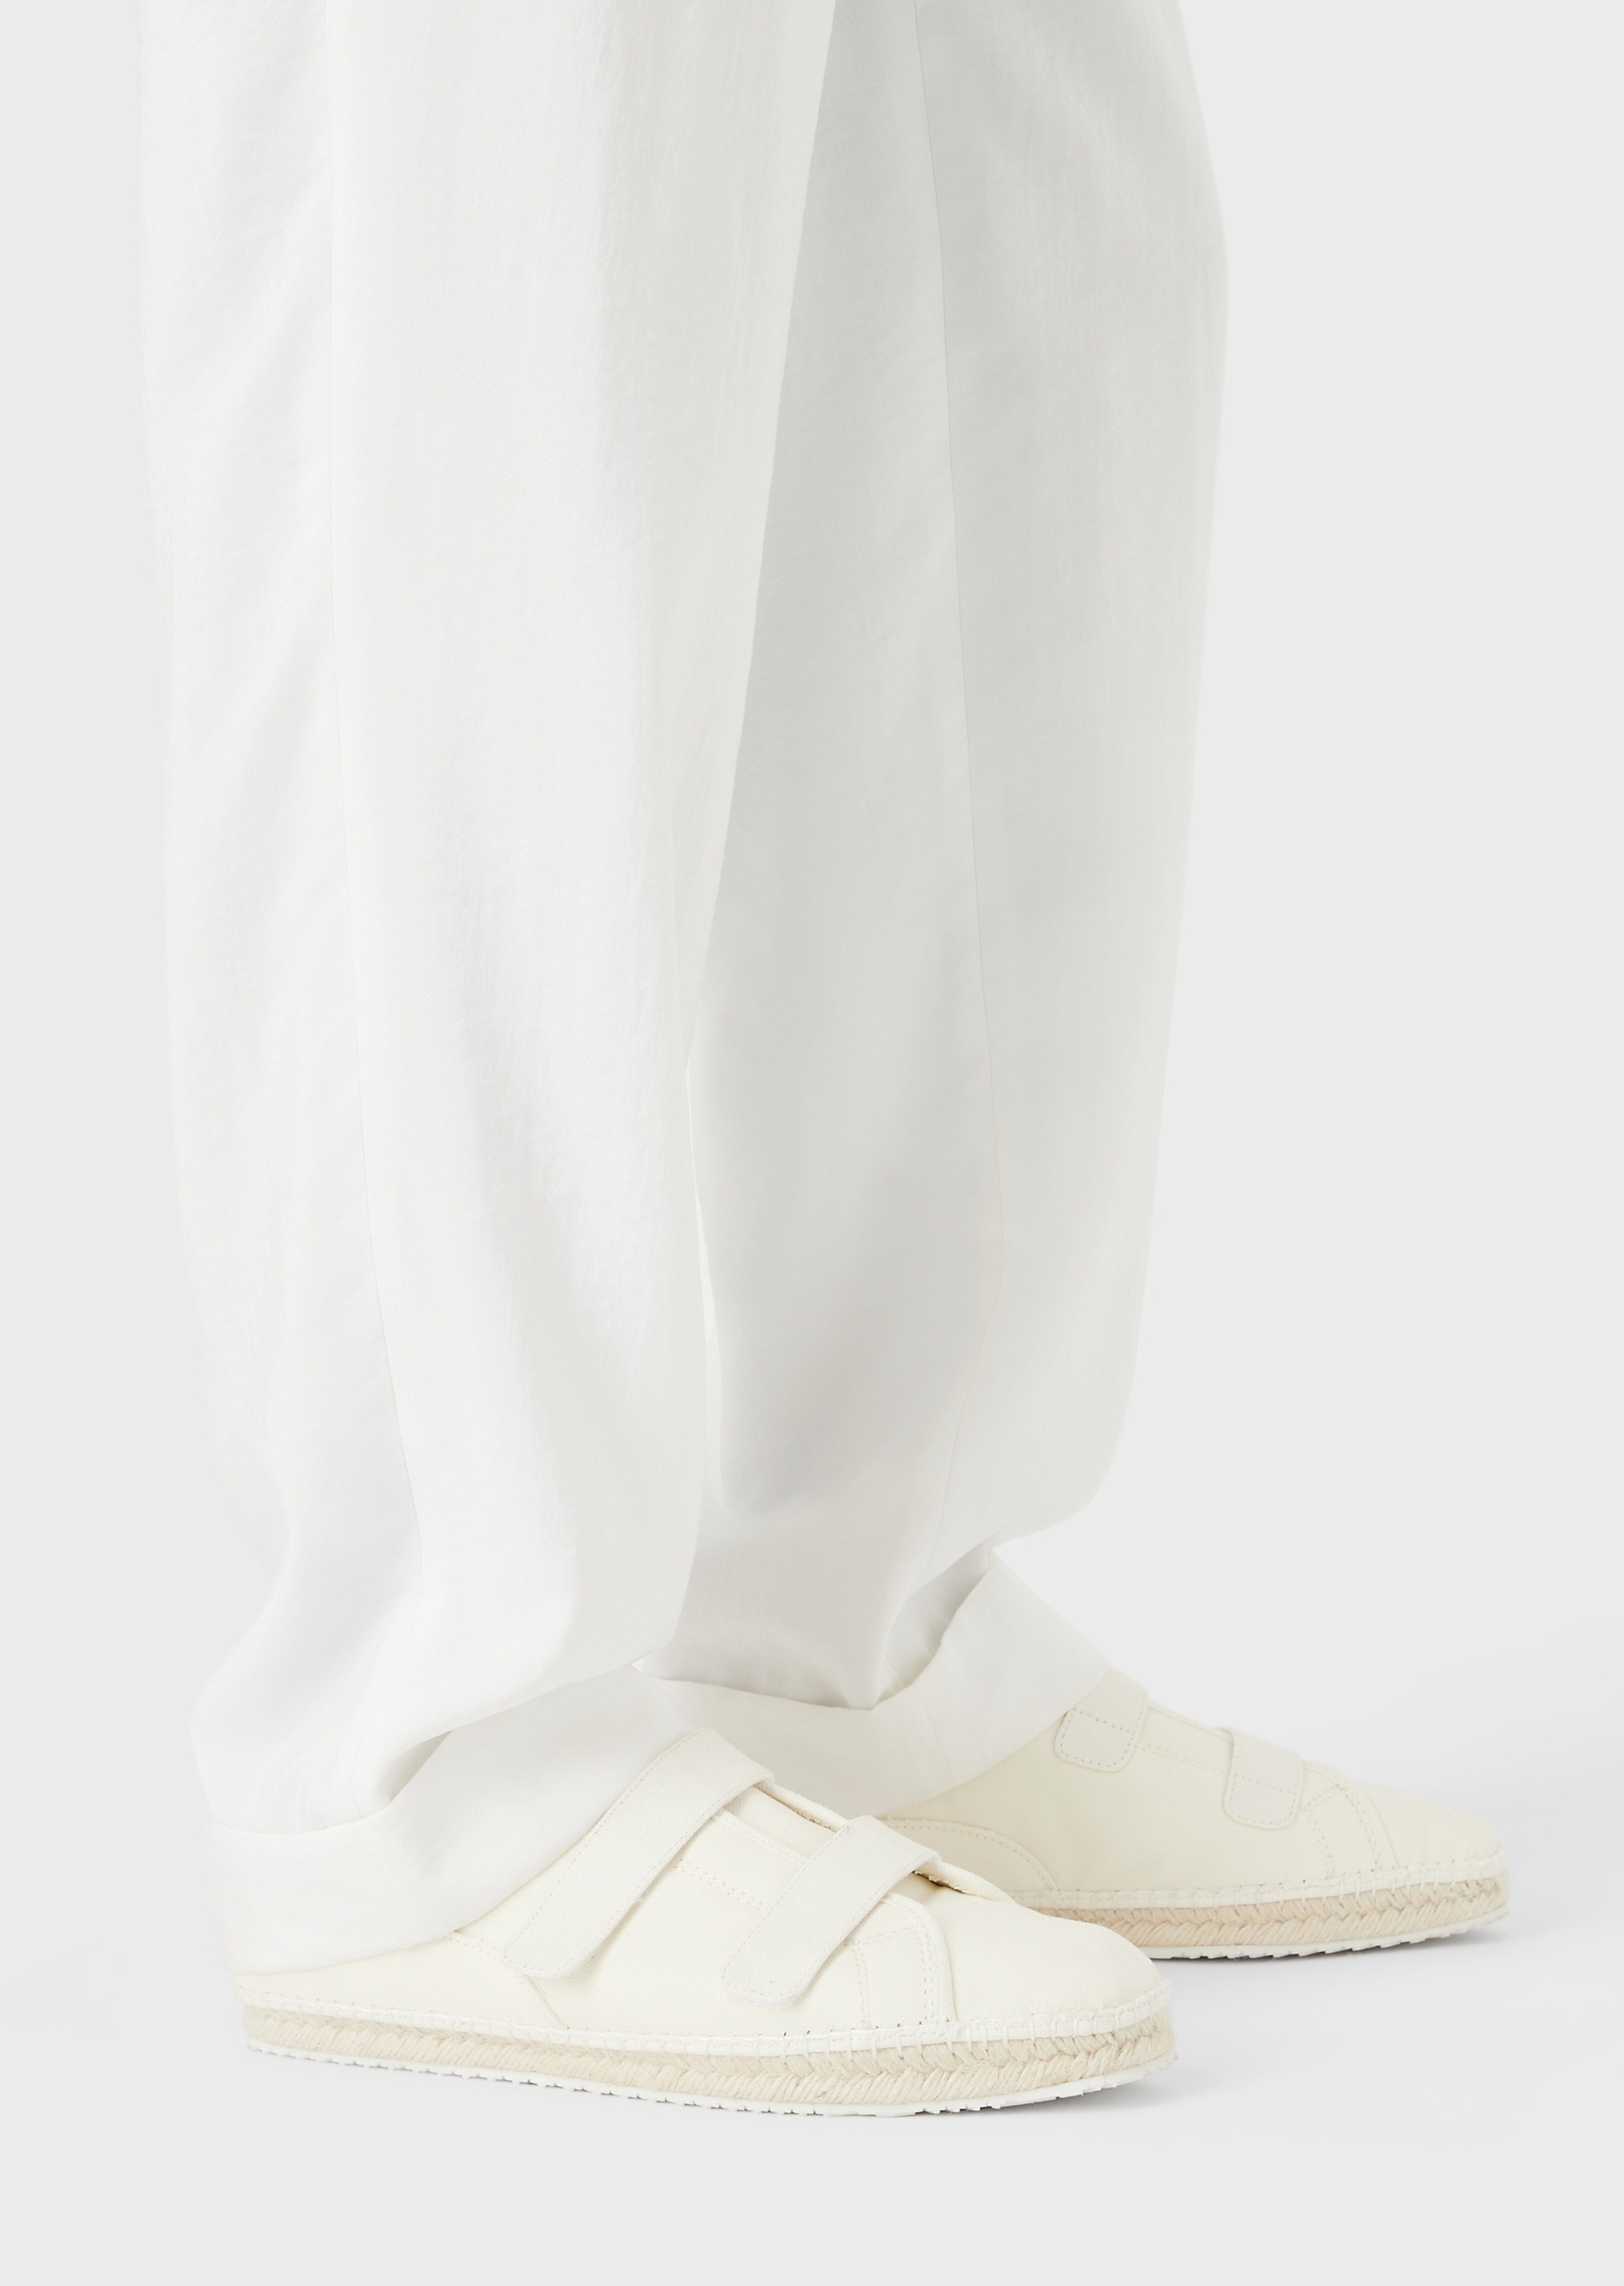 Giorgio Armani 胡歌同款双褶裥廓形休闲裤